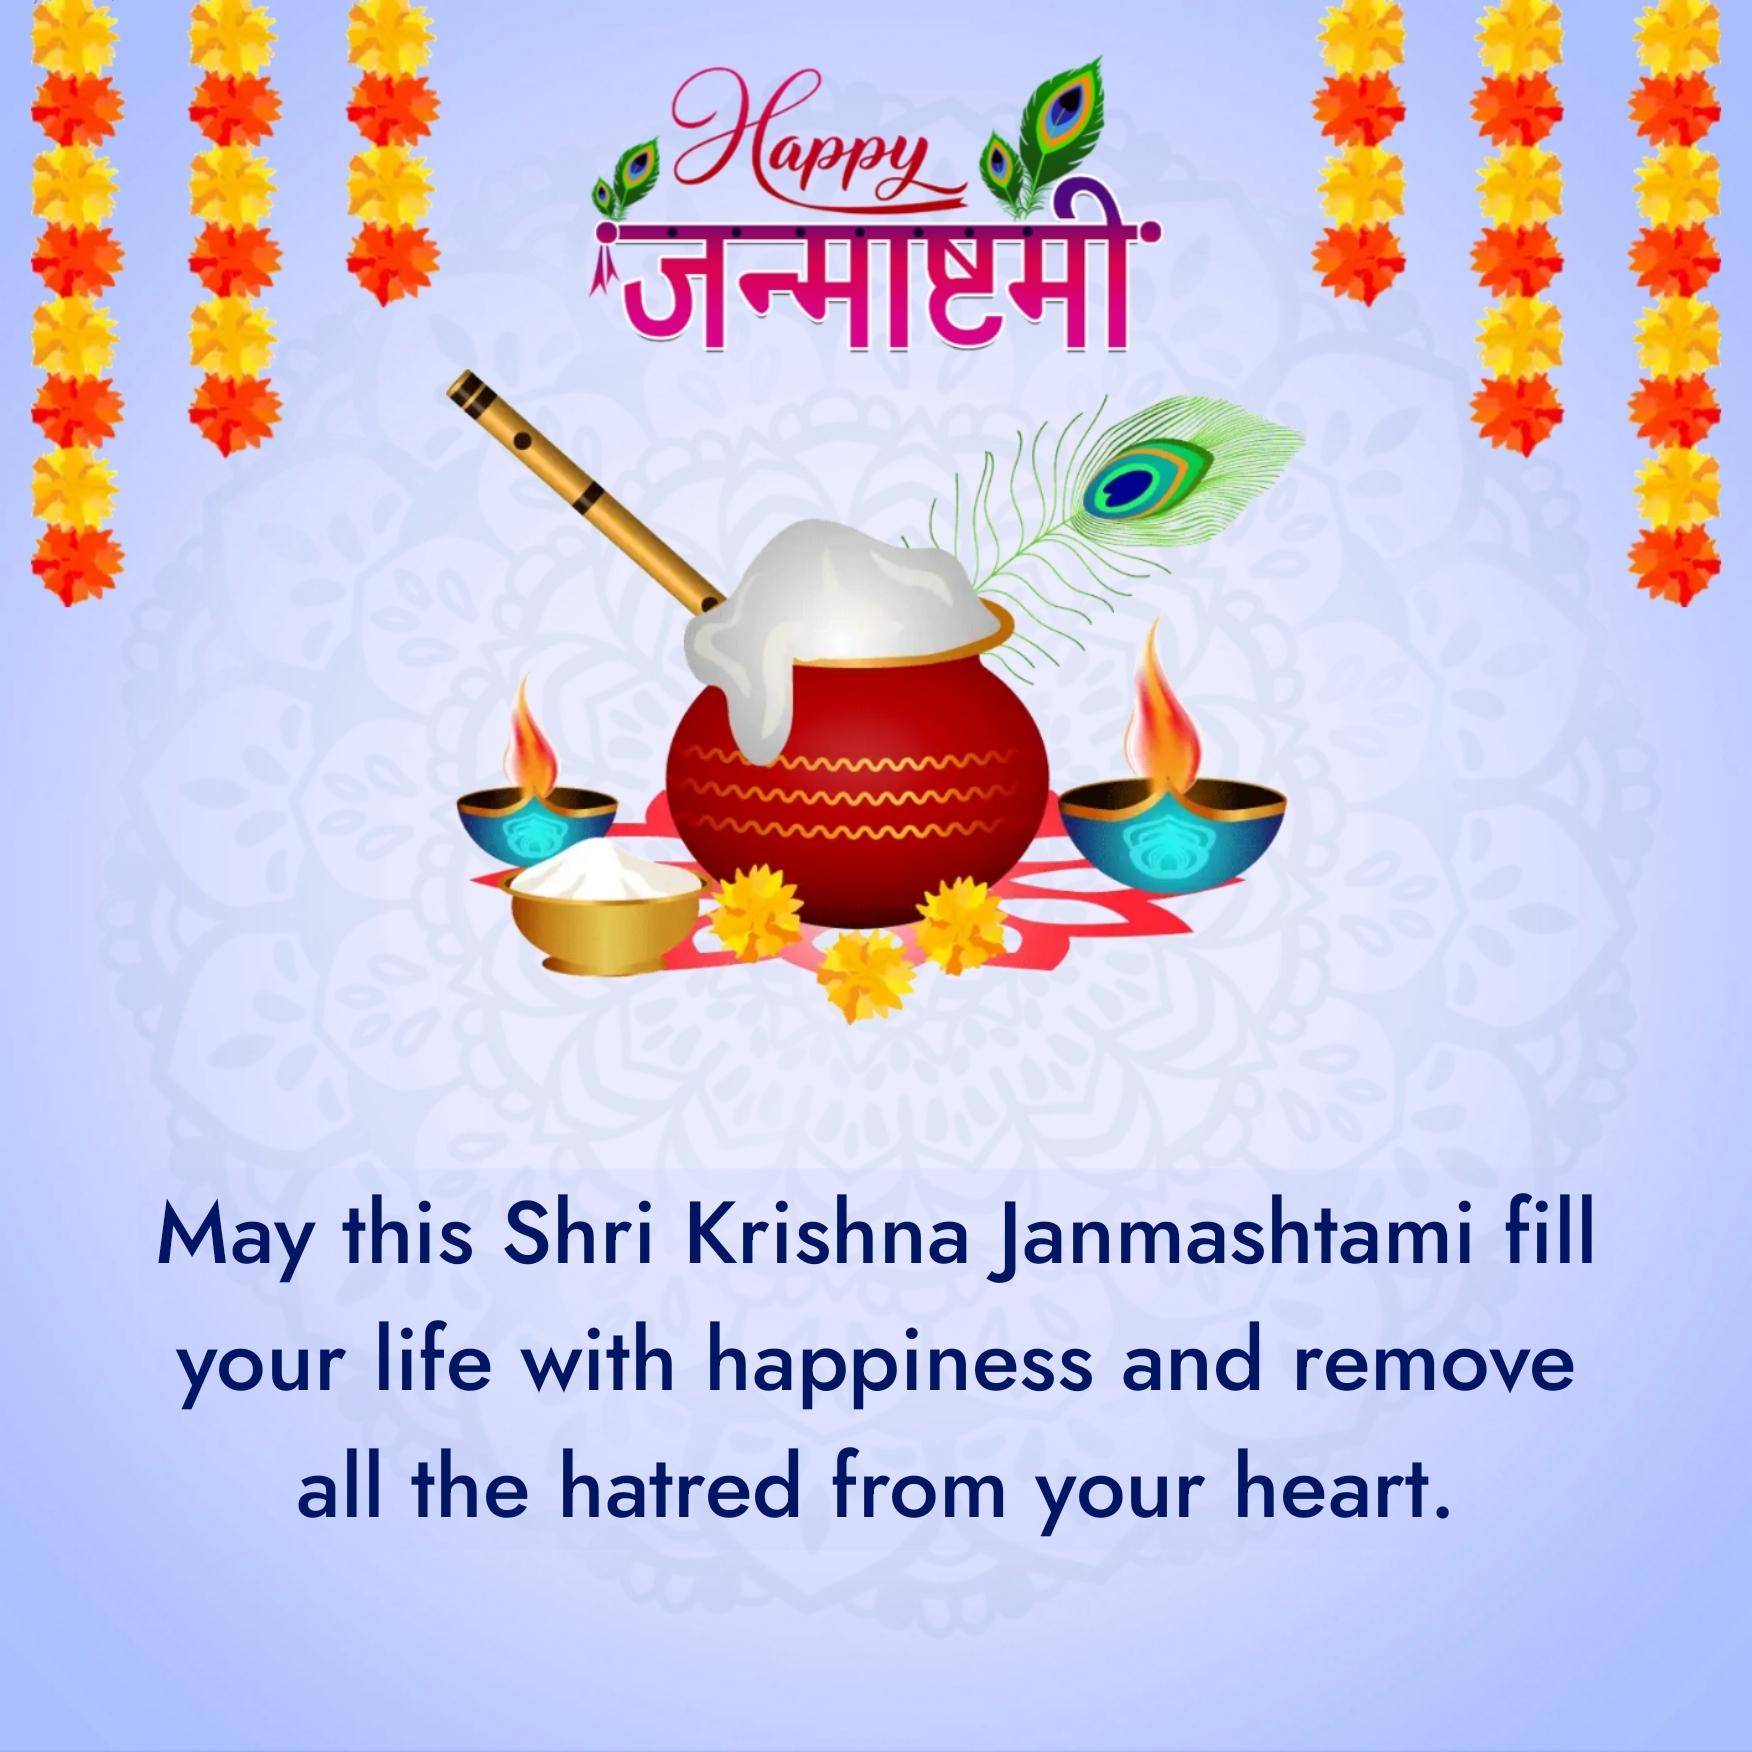 May this Shri Krishna Janmashtami fill your life with happiness